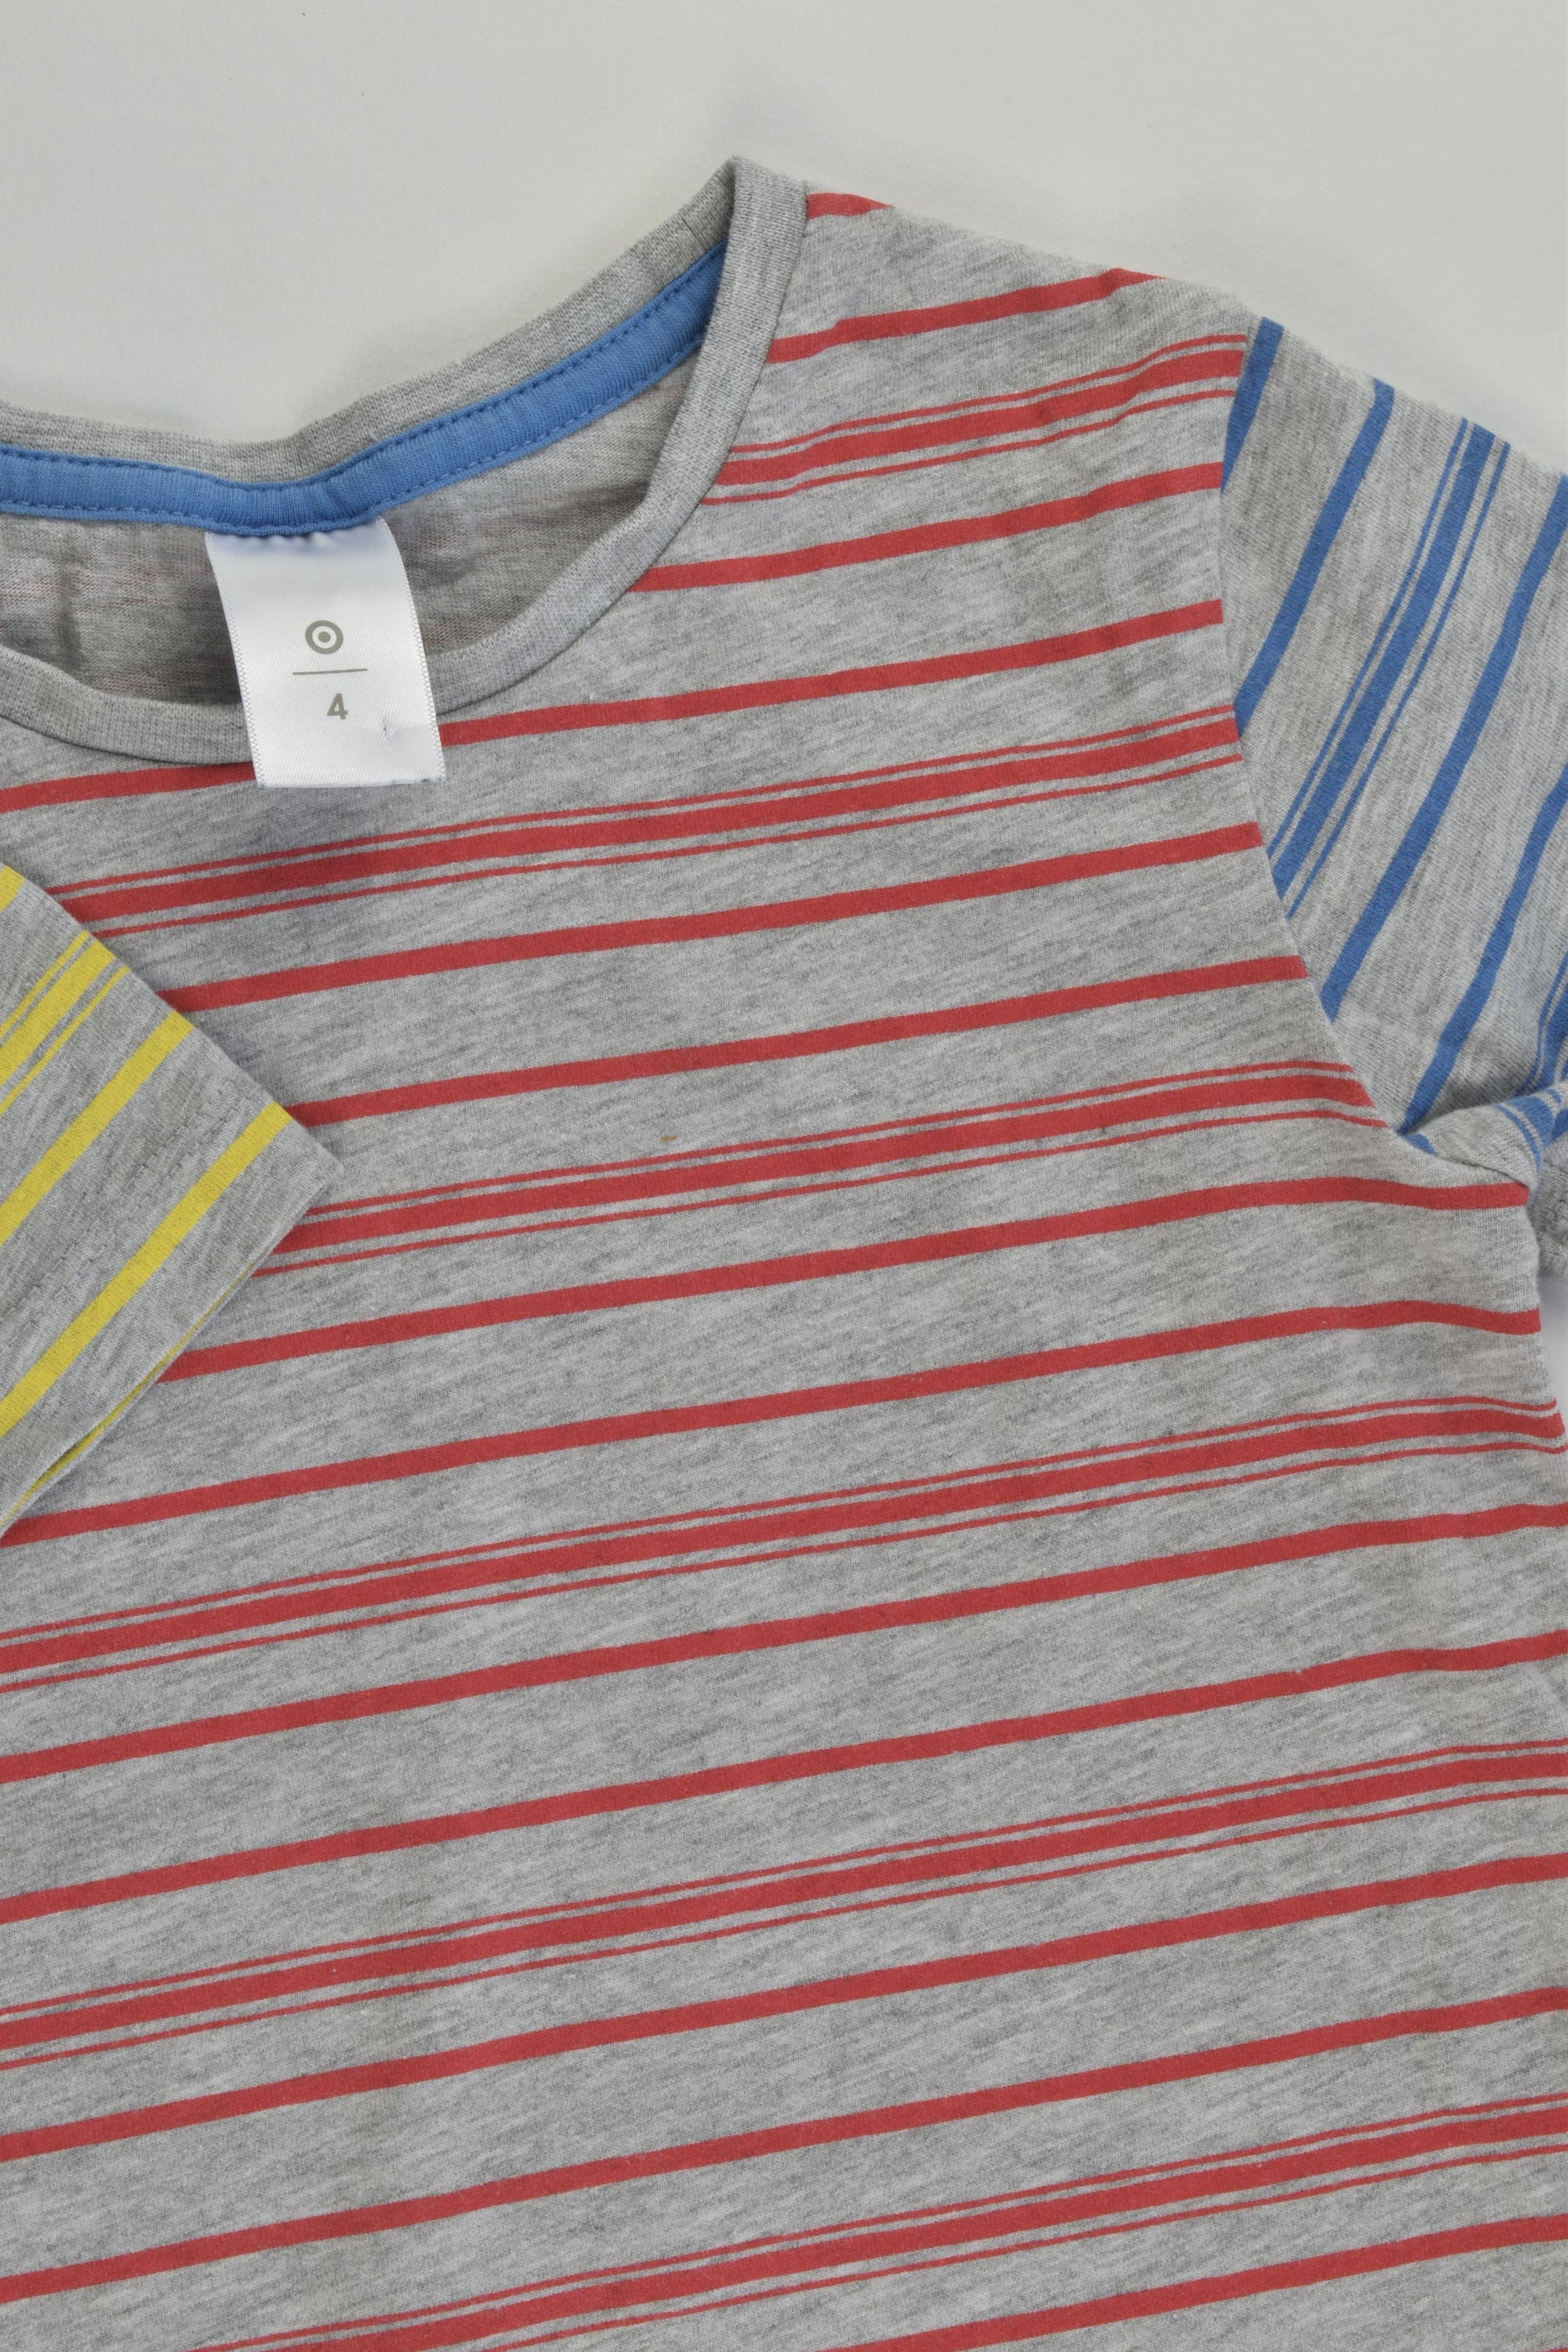 Target Size 4 Striped T-shirt